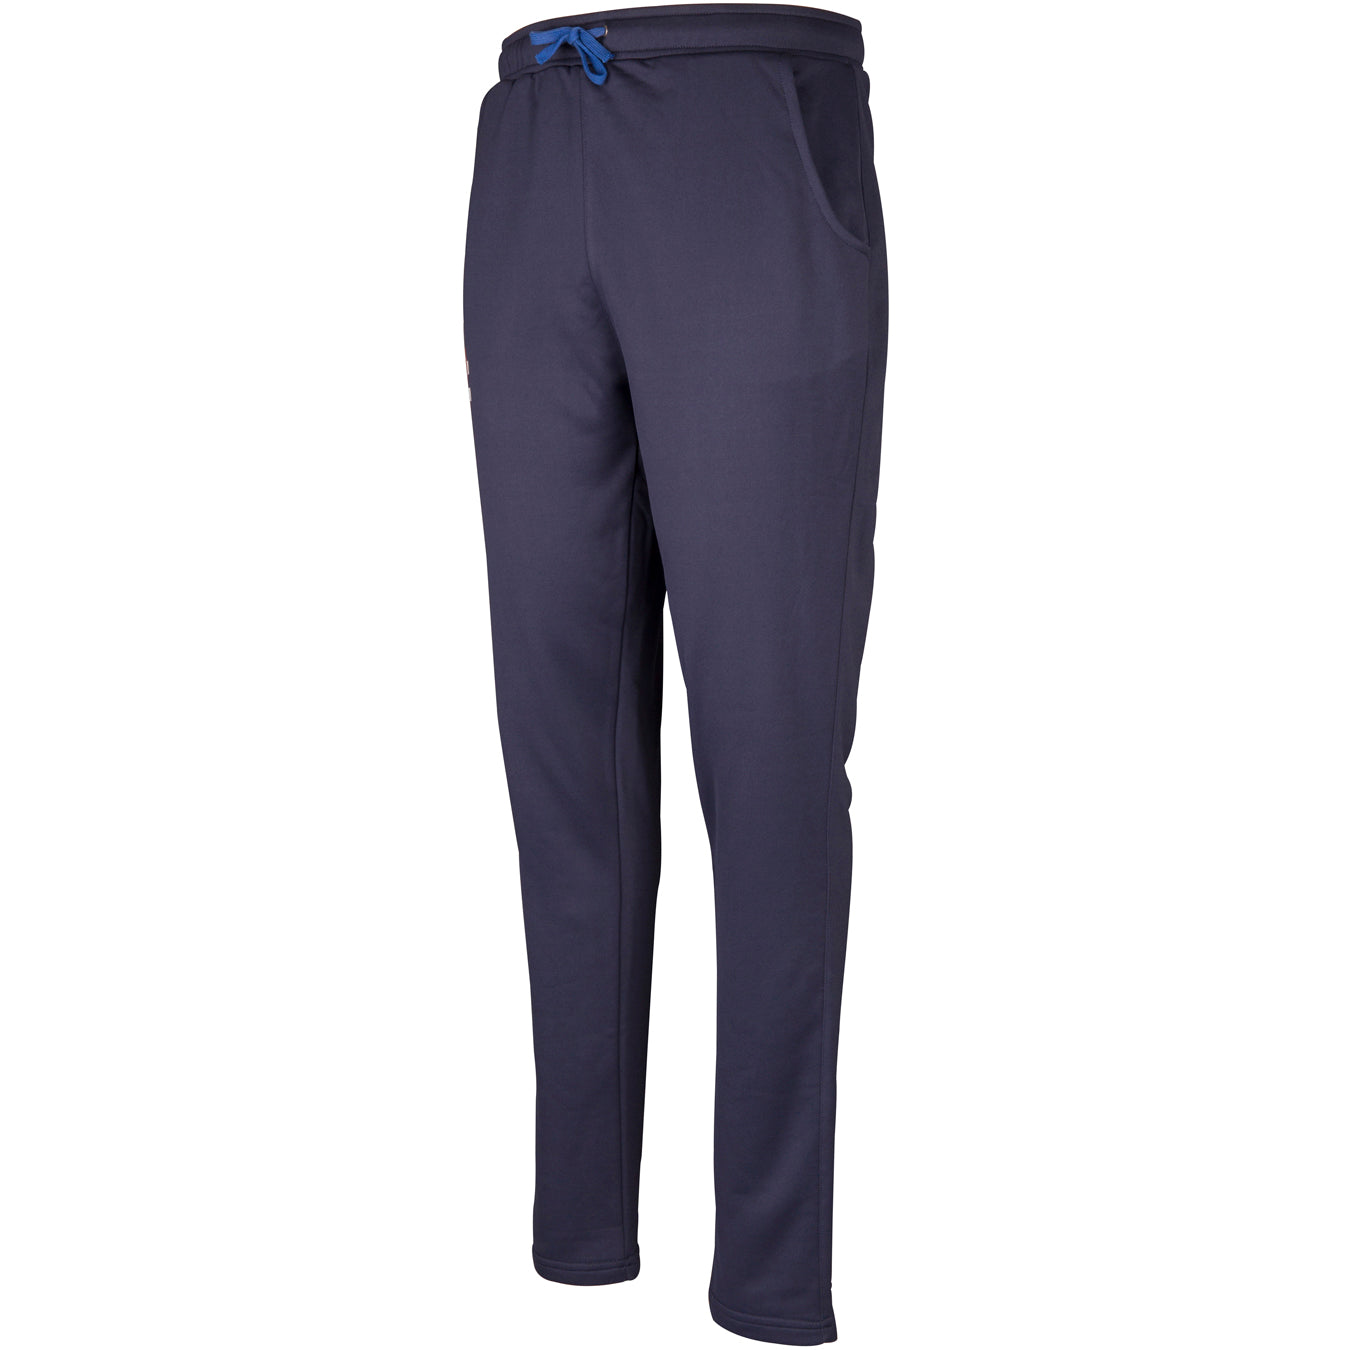 Pro Performance Training Trousers | Gray-Nicolls - Free Shipping ...